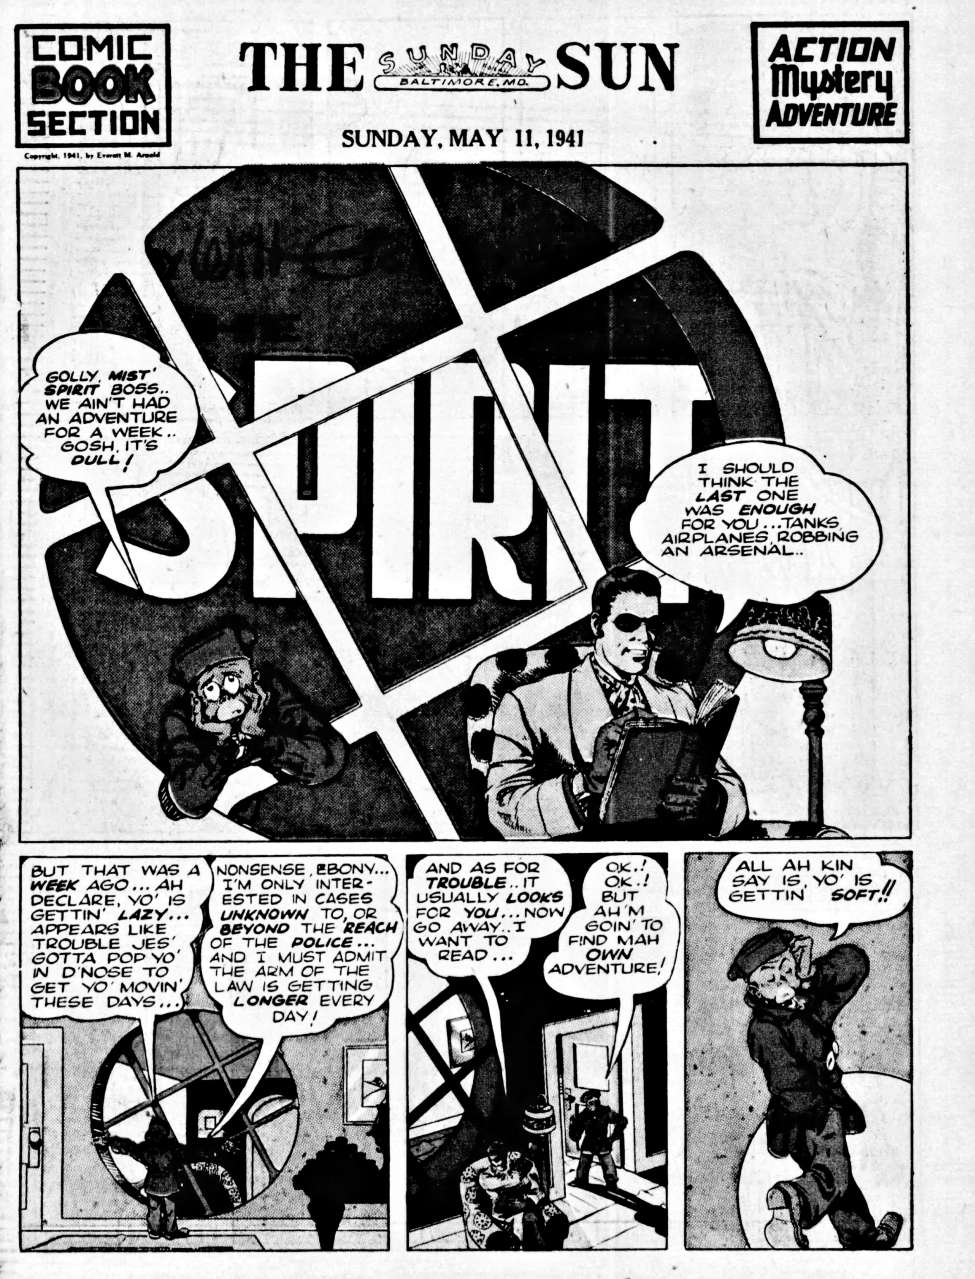 Book Cover For The Spirit (1941-05-11) - Baltimore Sun (b/w)